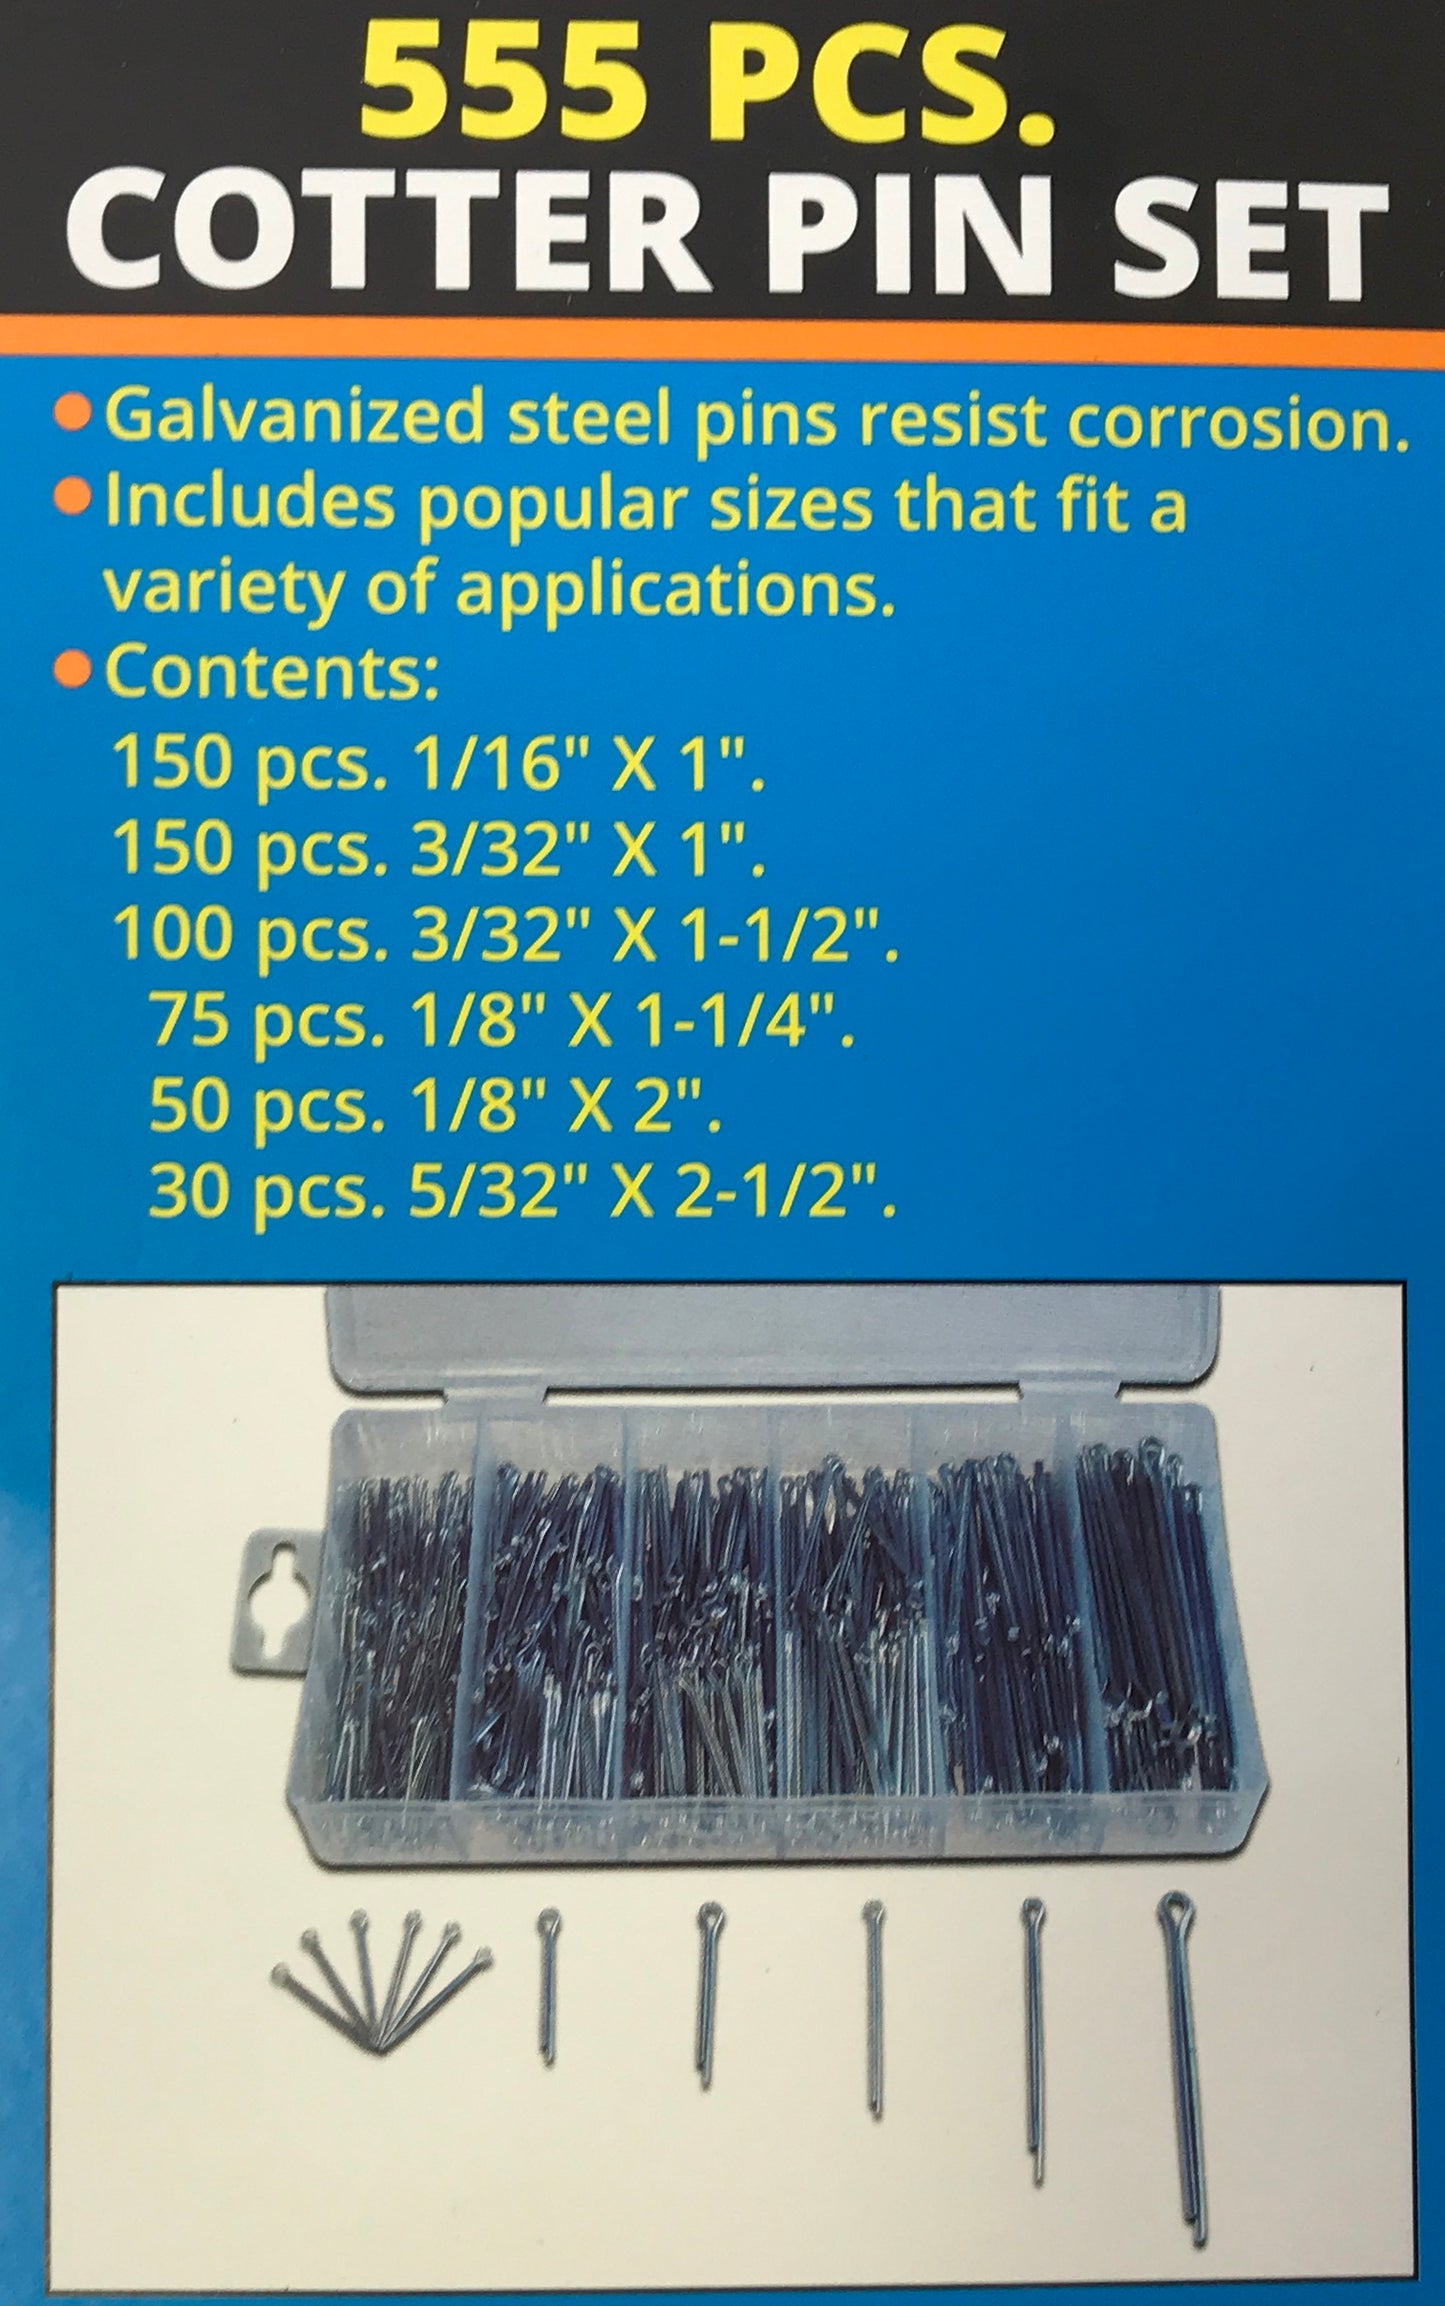 555 Piece Cotter Pin Clip Key Fitting Assortment Tool Set Kit